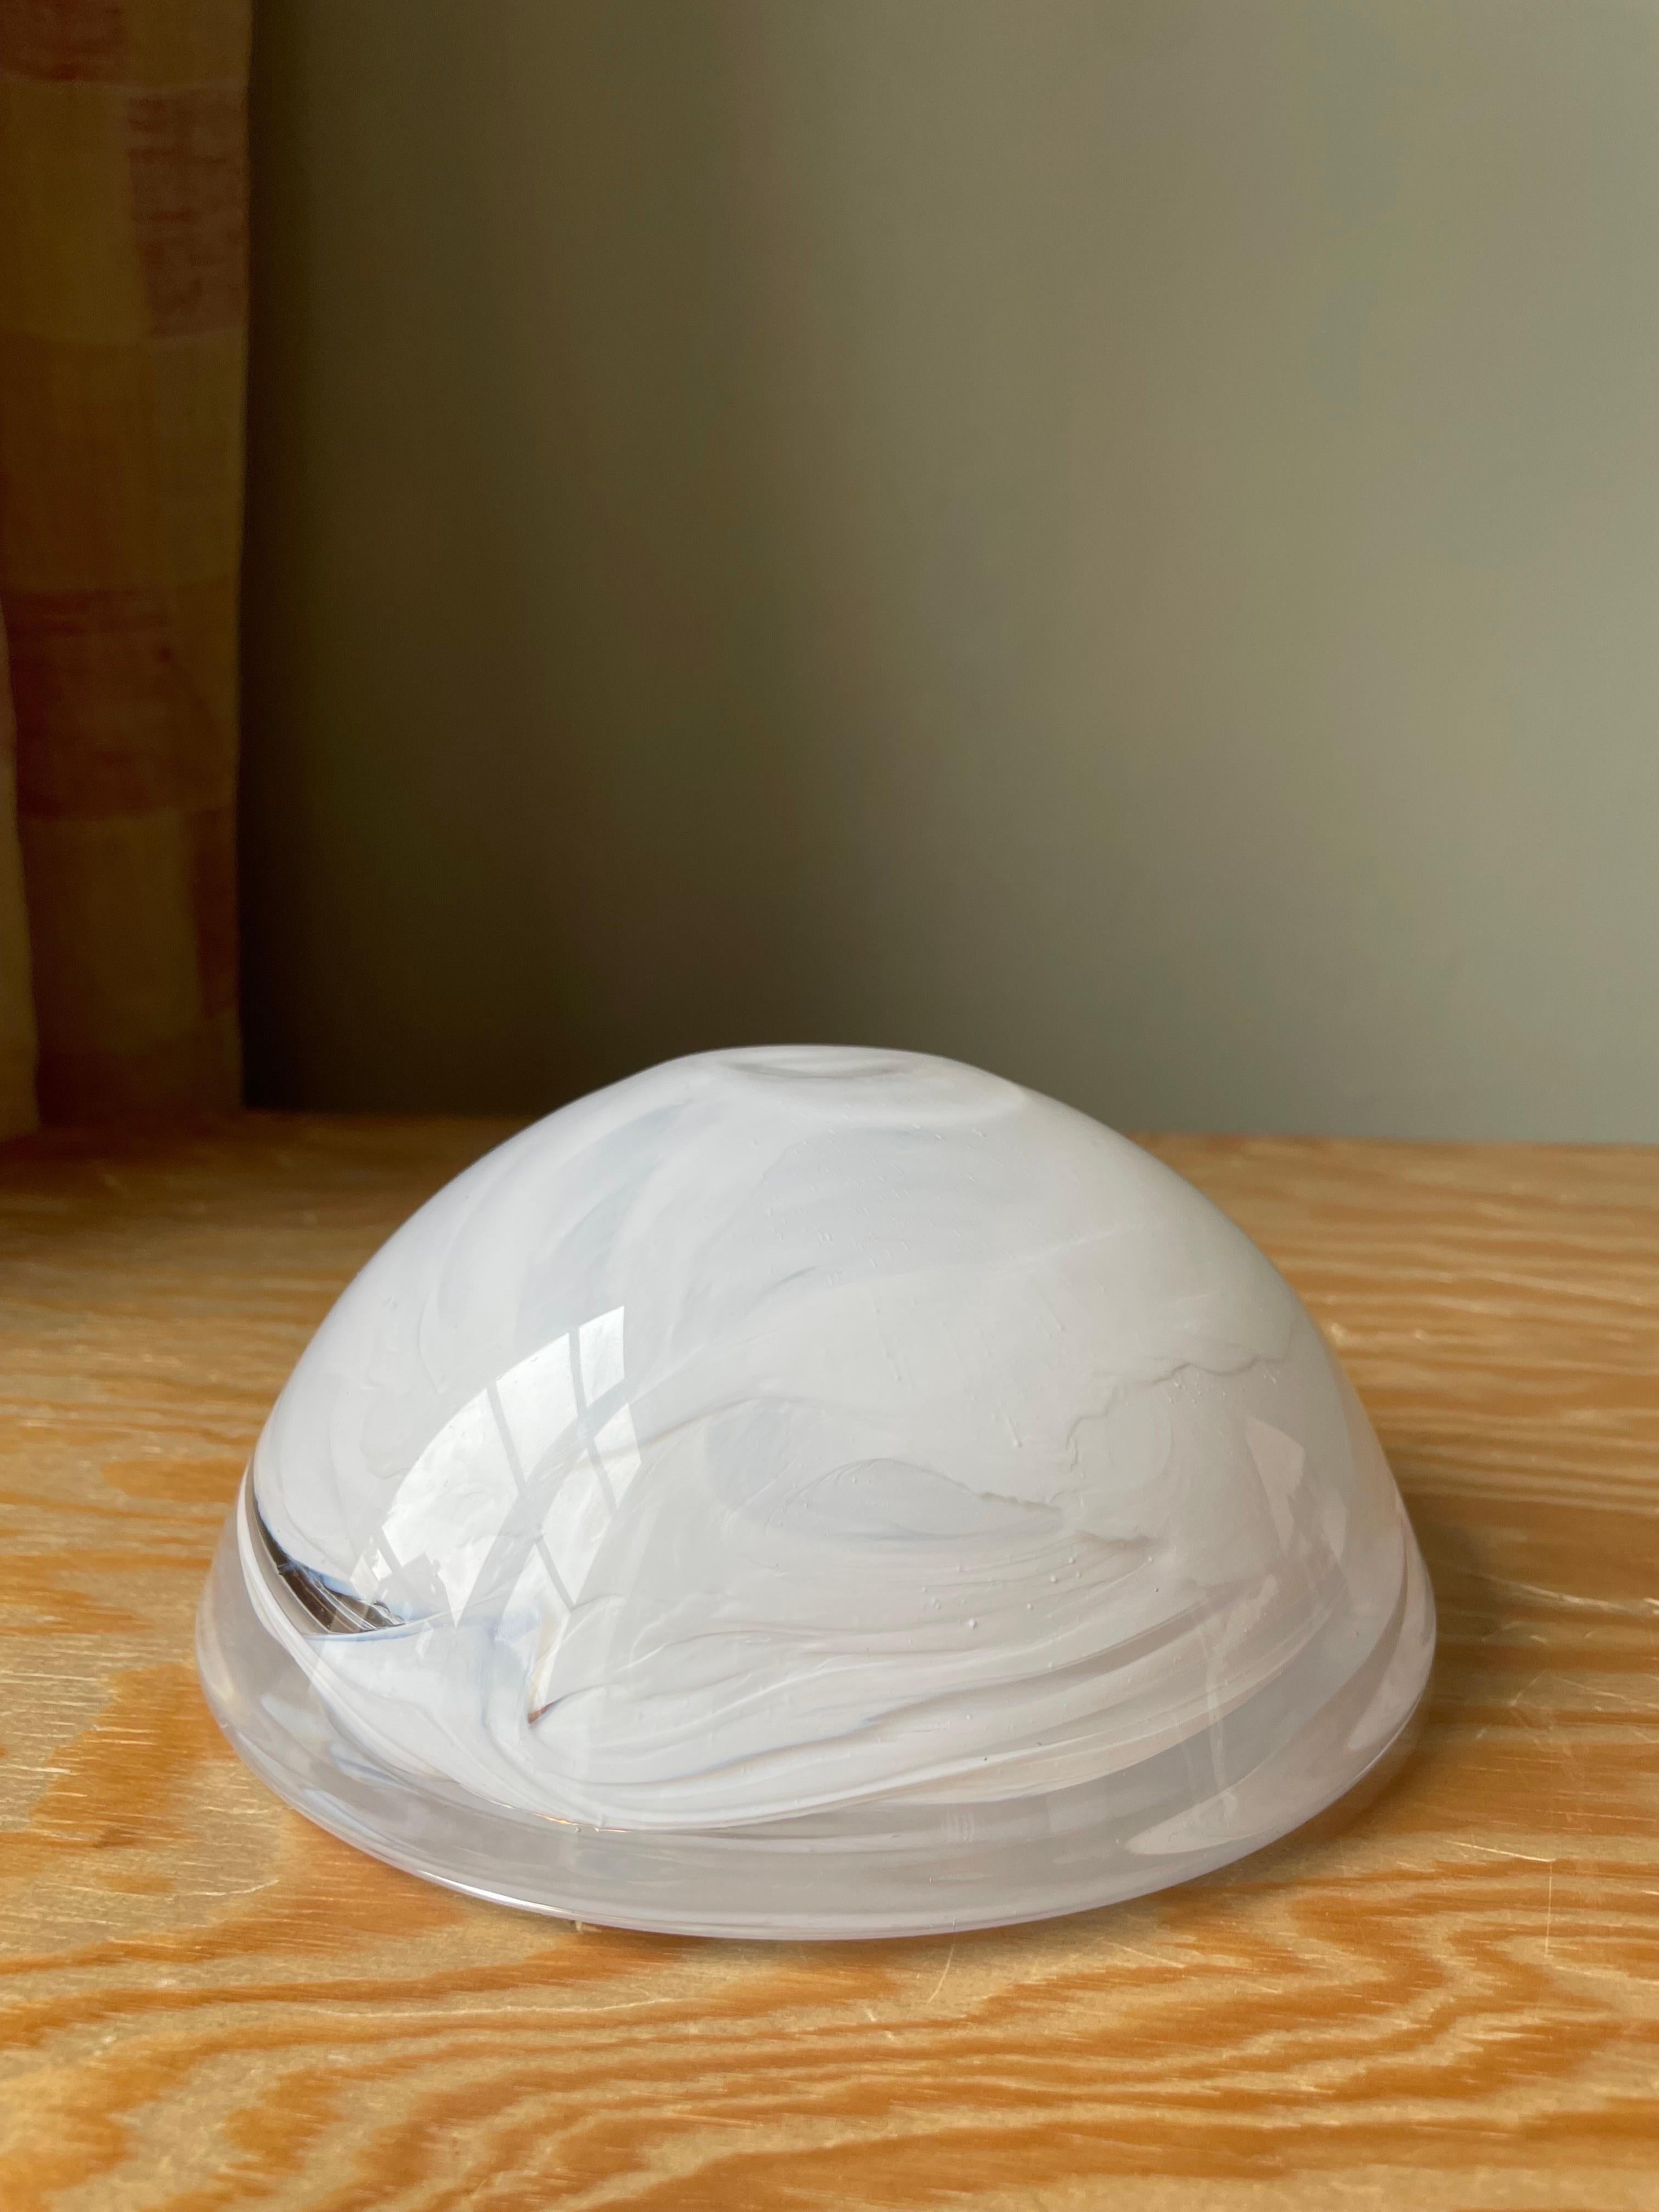 Kosta Boda Swedish Art Glass White Swirl Bowl, 1980s For Sale 1